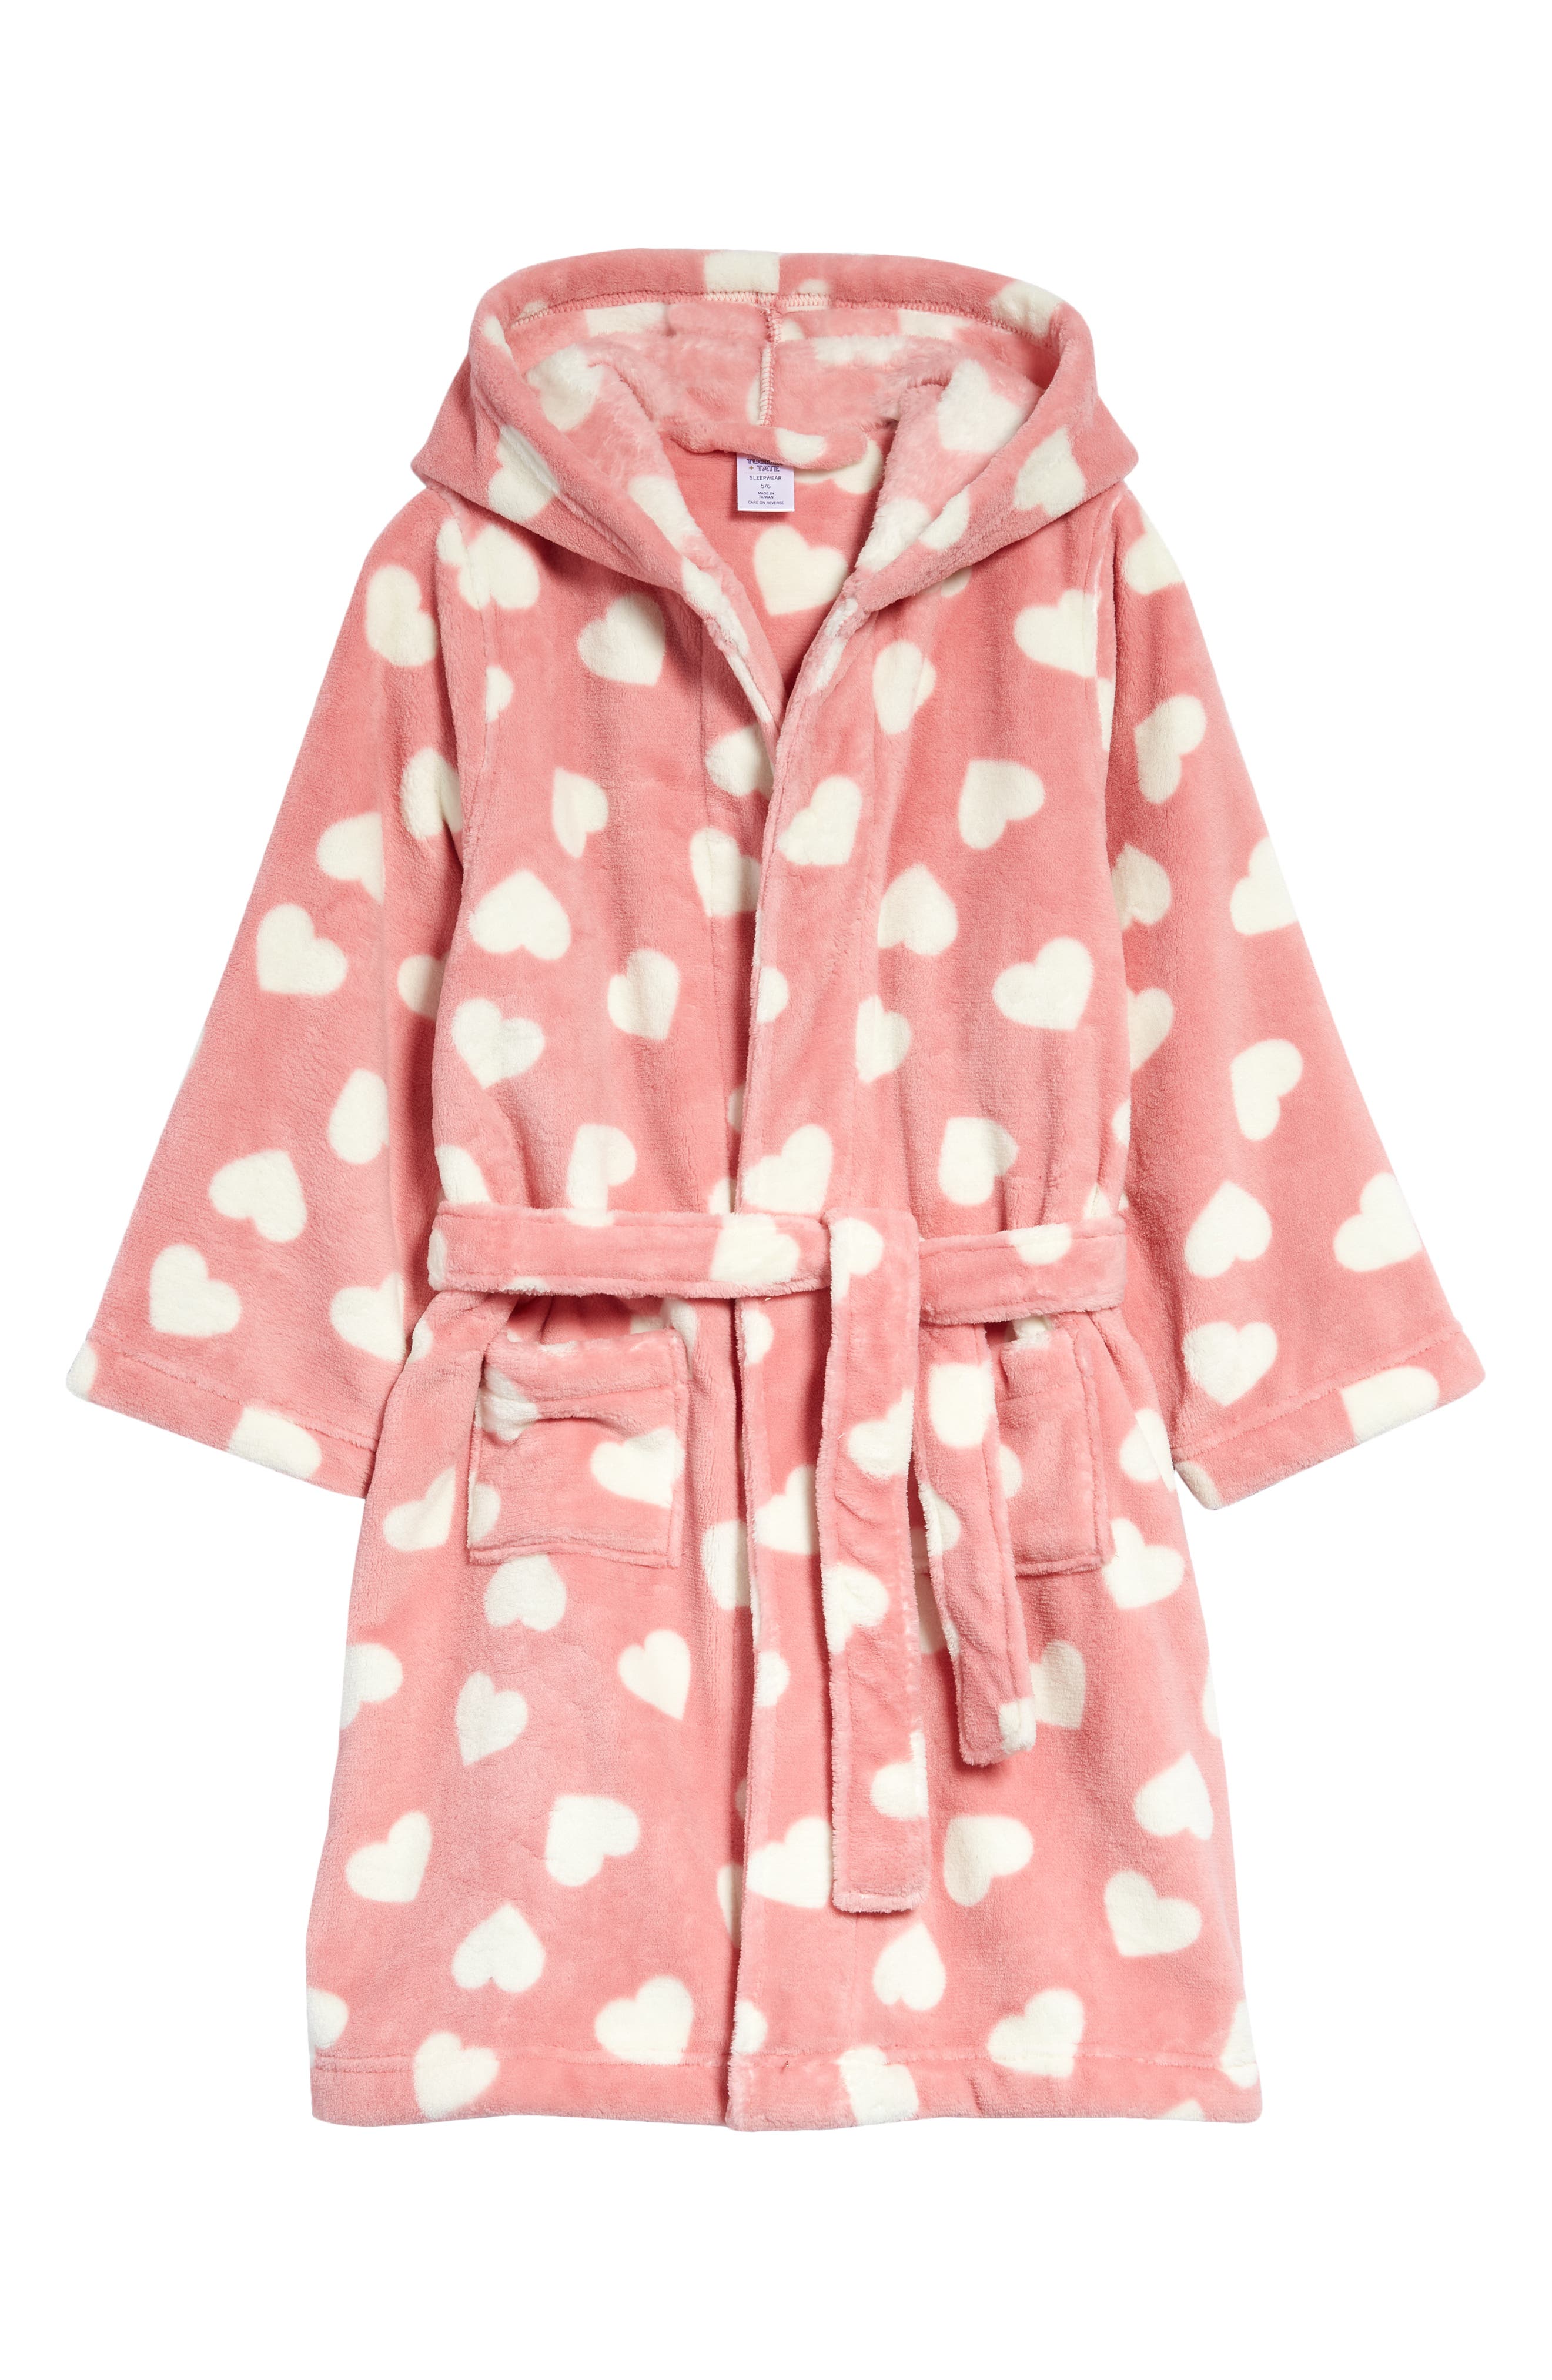 Peppa Pig Girls' Soft Fleece Robe Luxe Plush Comfy Spa Bathrobe Kids Sleepwear 